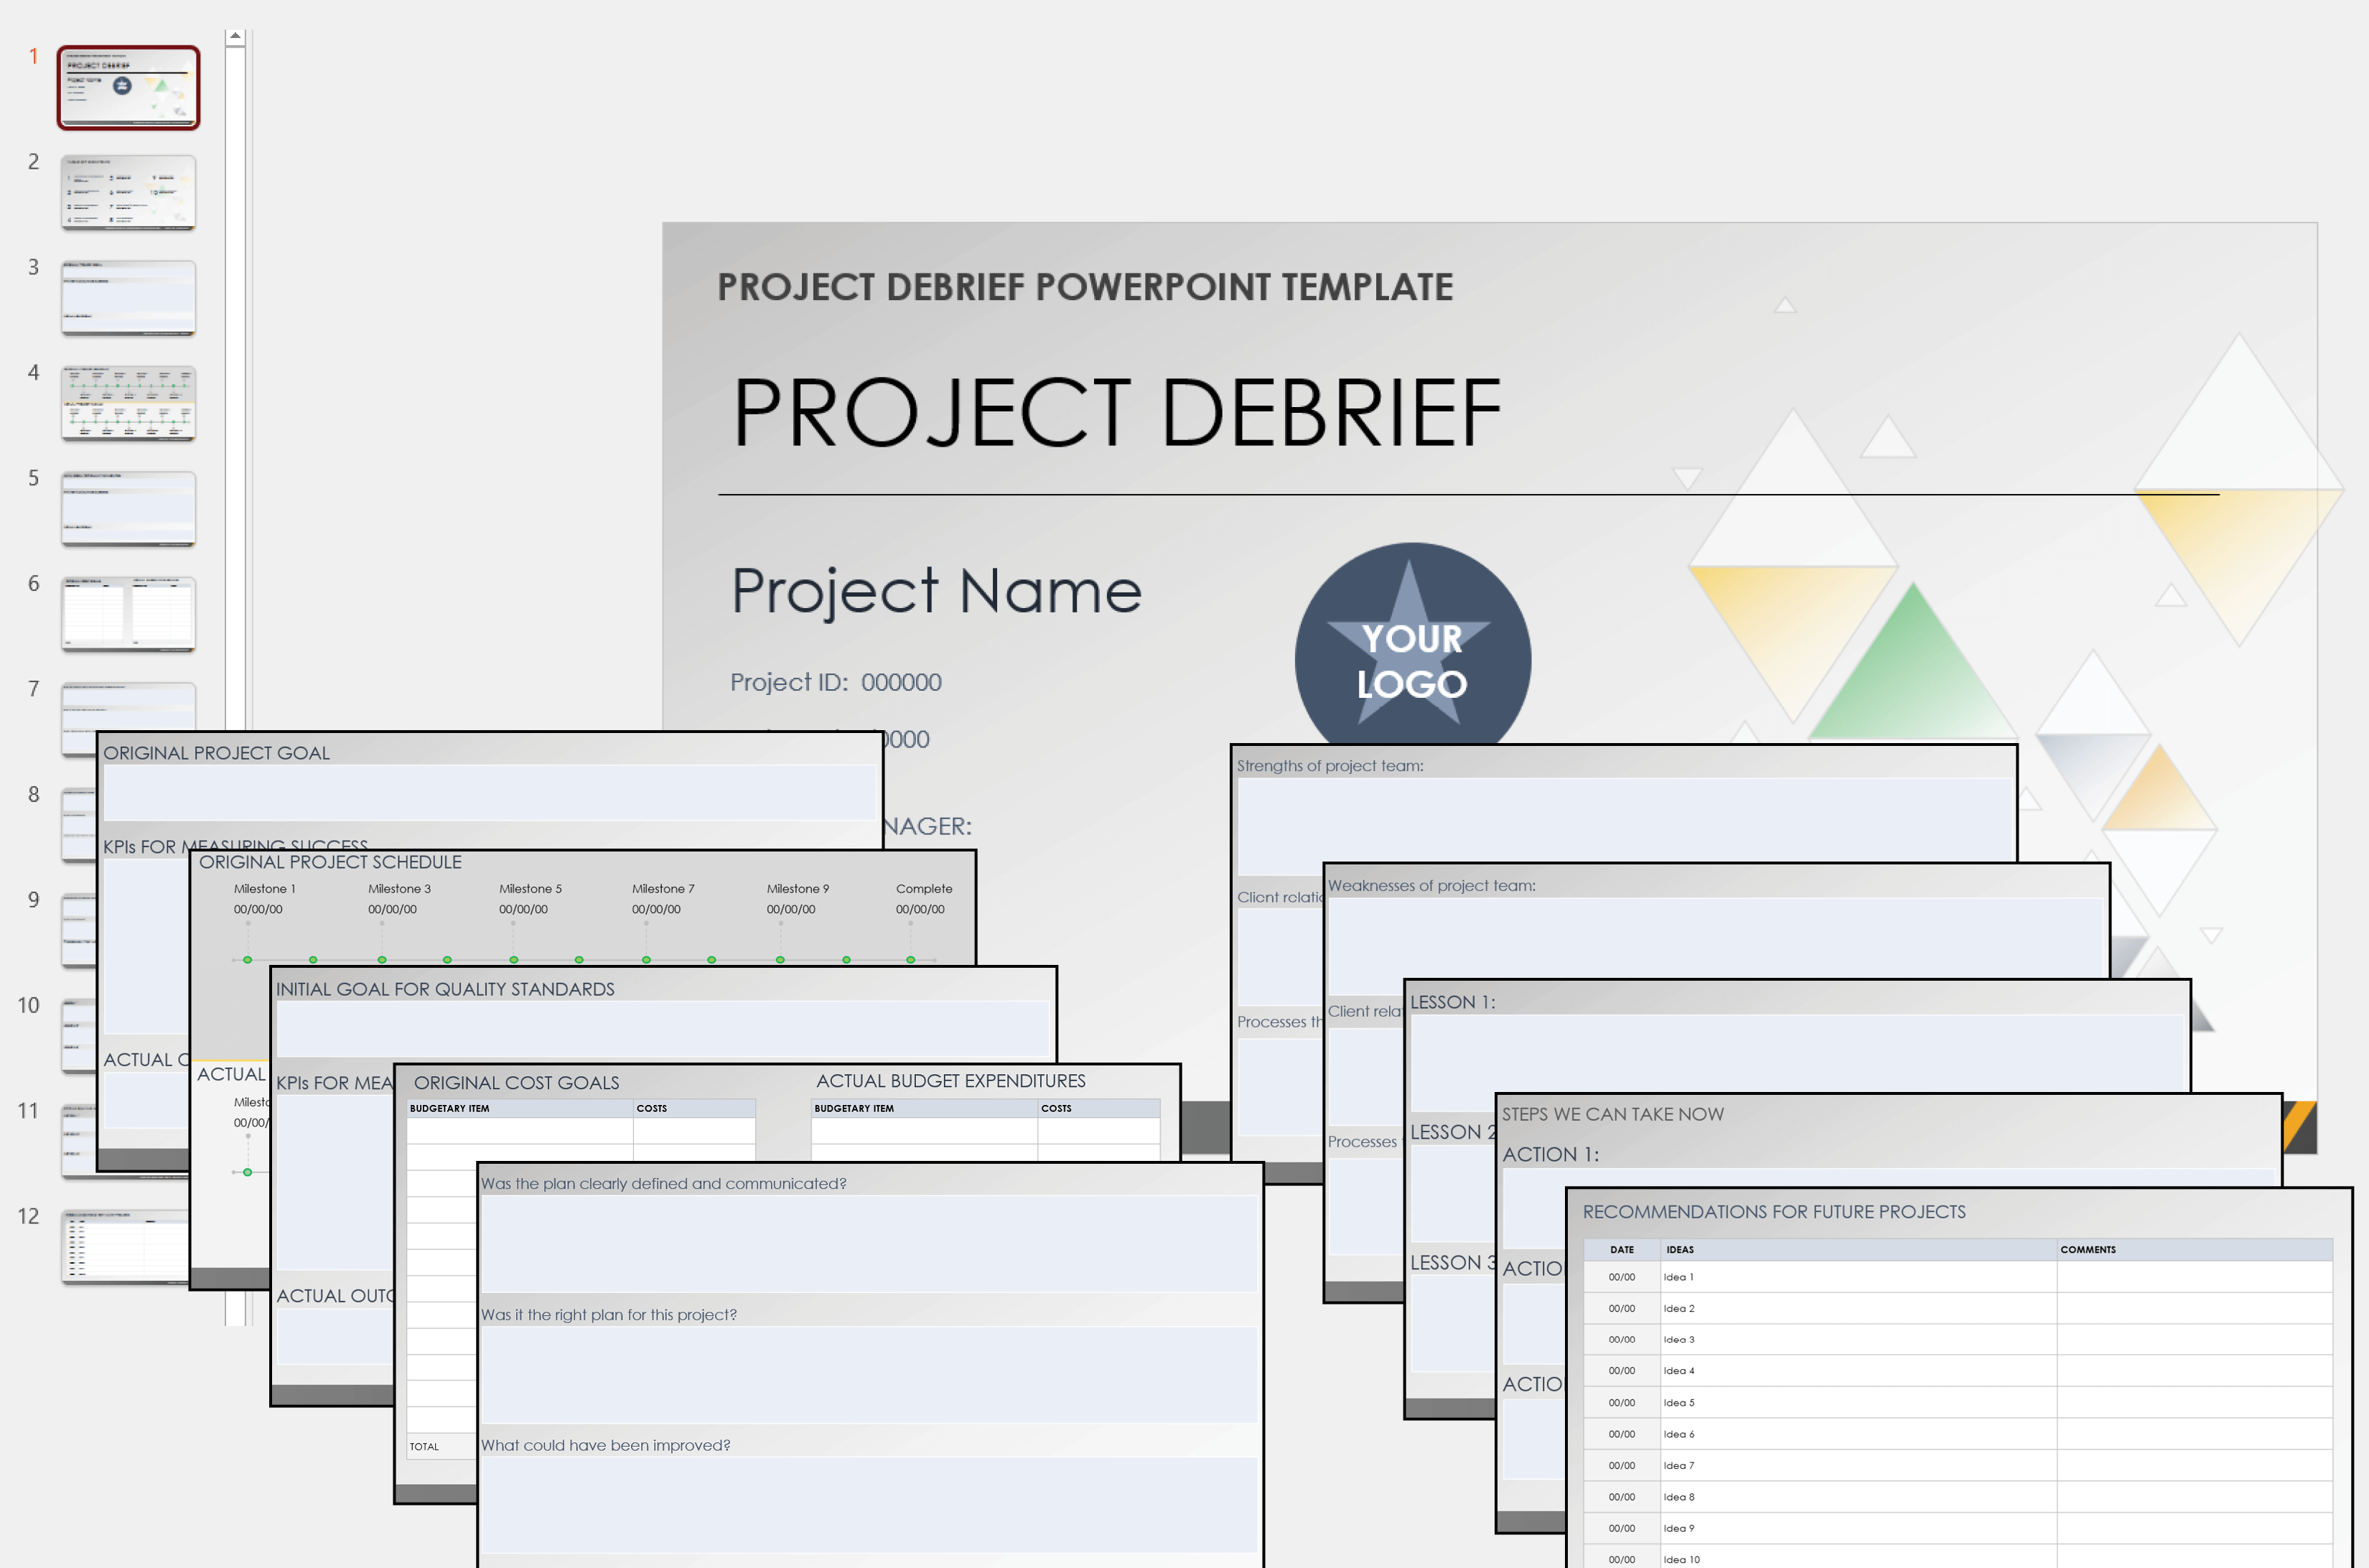 Project Debrief Template